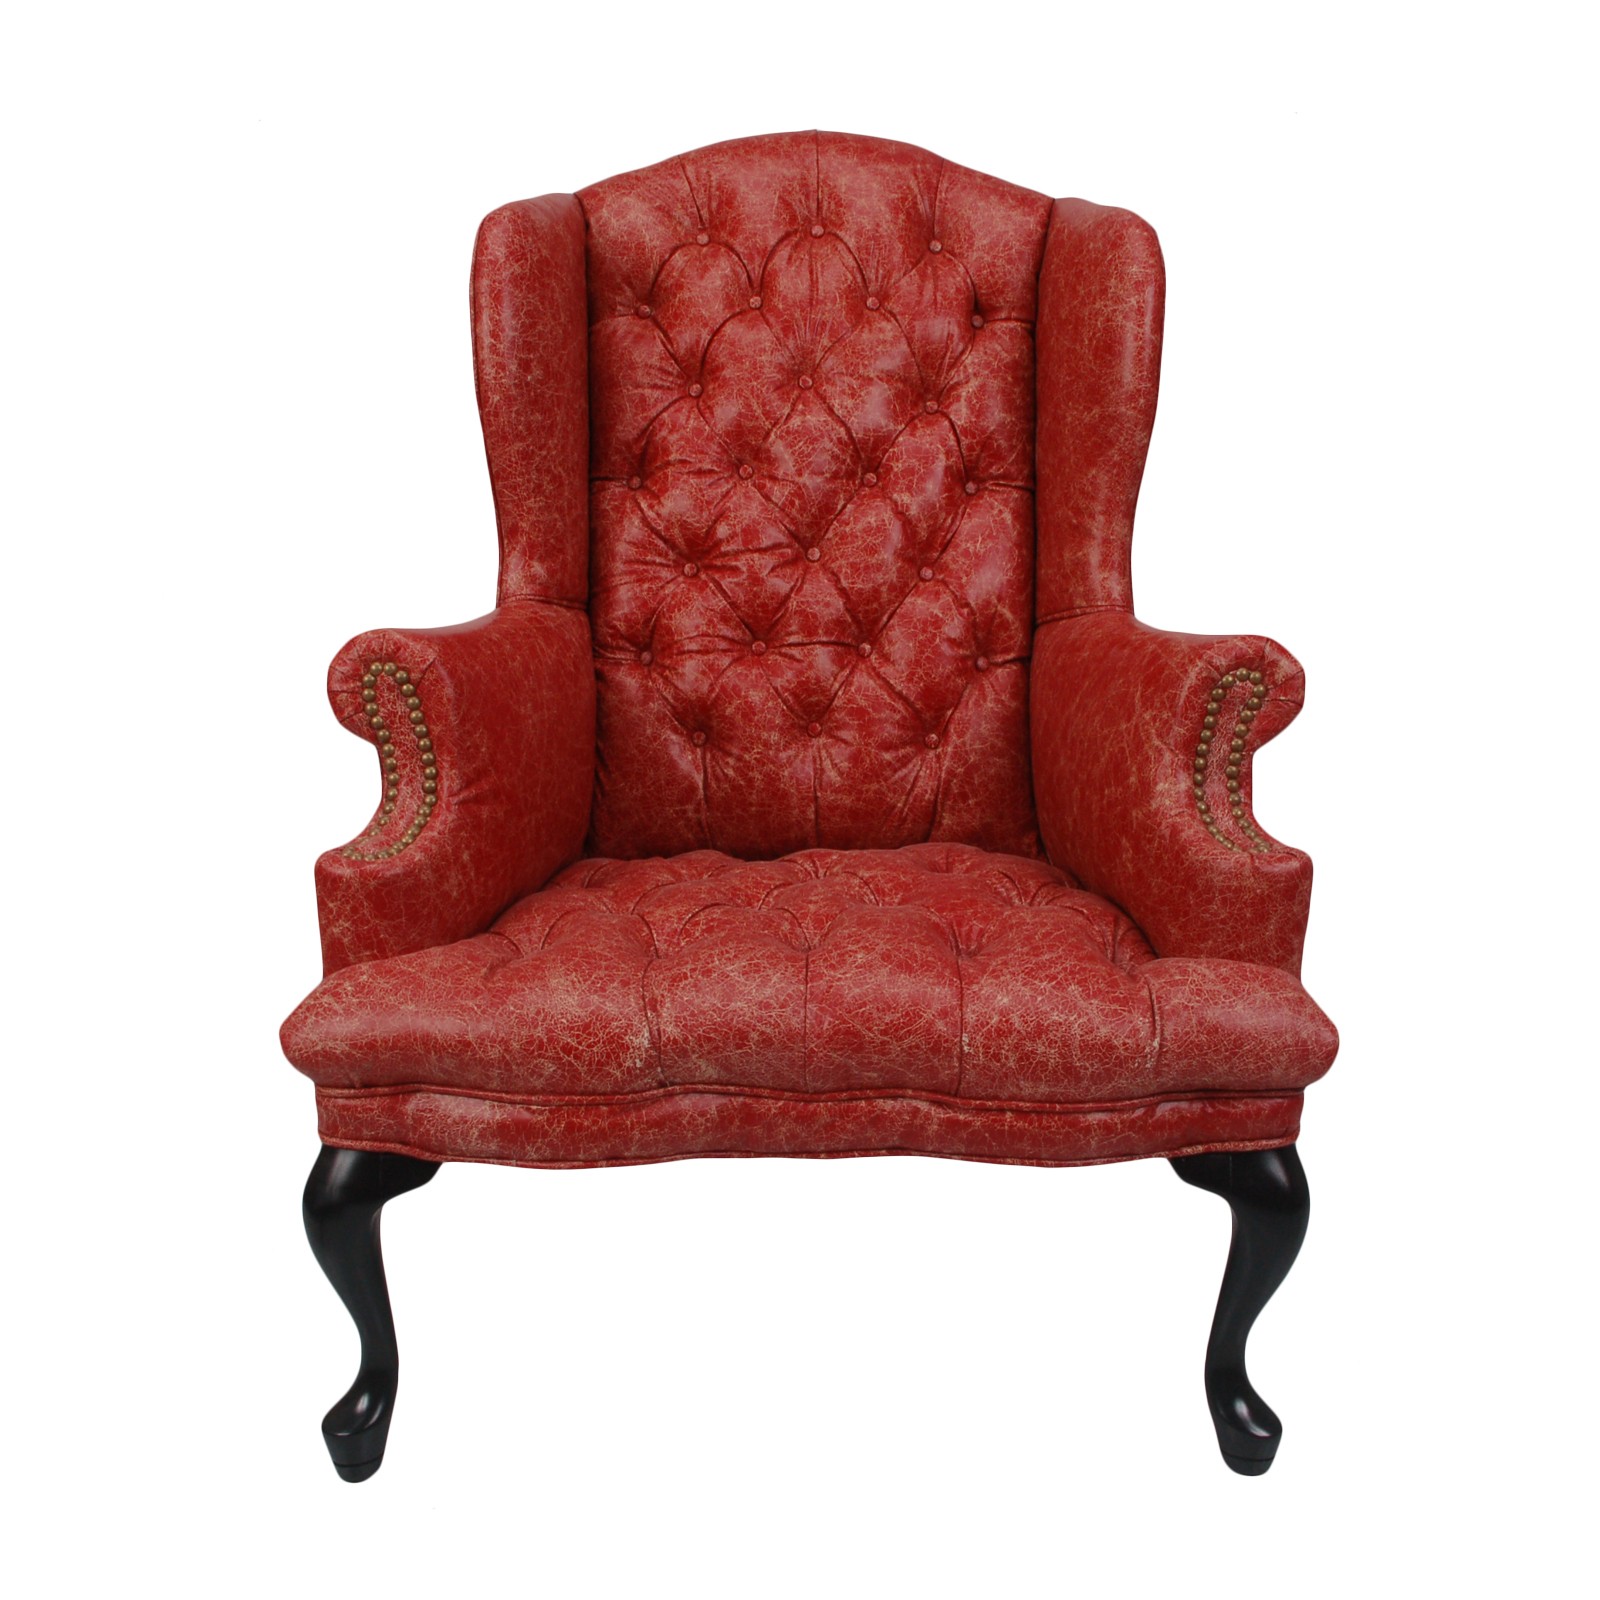 Jonathan wingback chair red formdecor